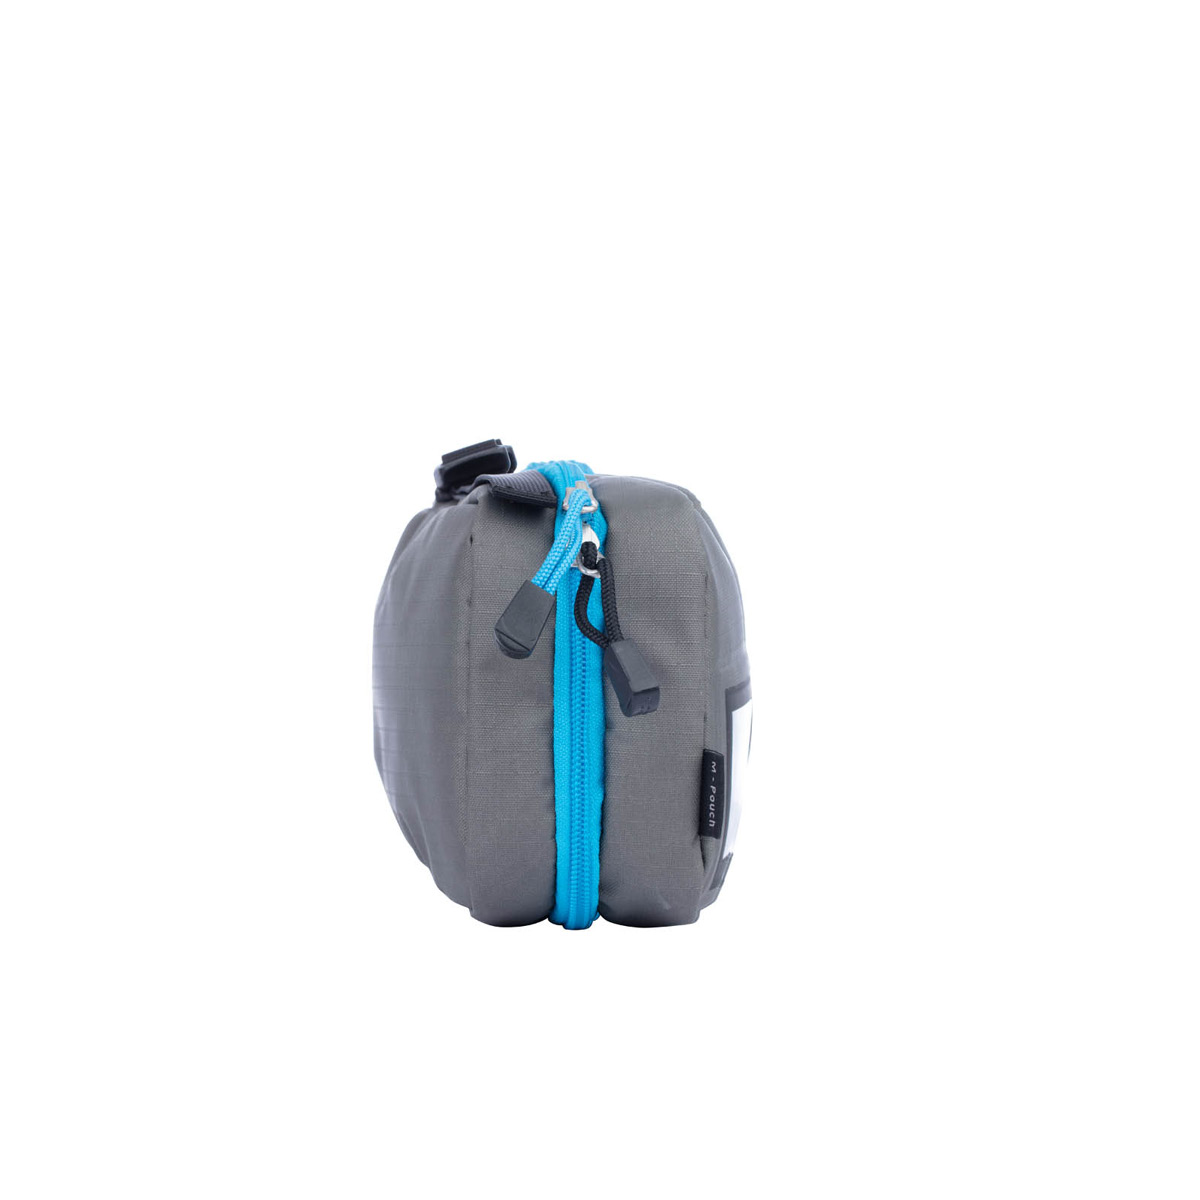 F-Stop Accessory Pouch Medium Grey/Blue Zipper